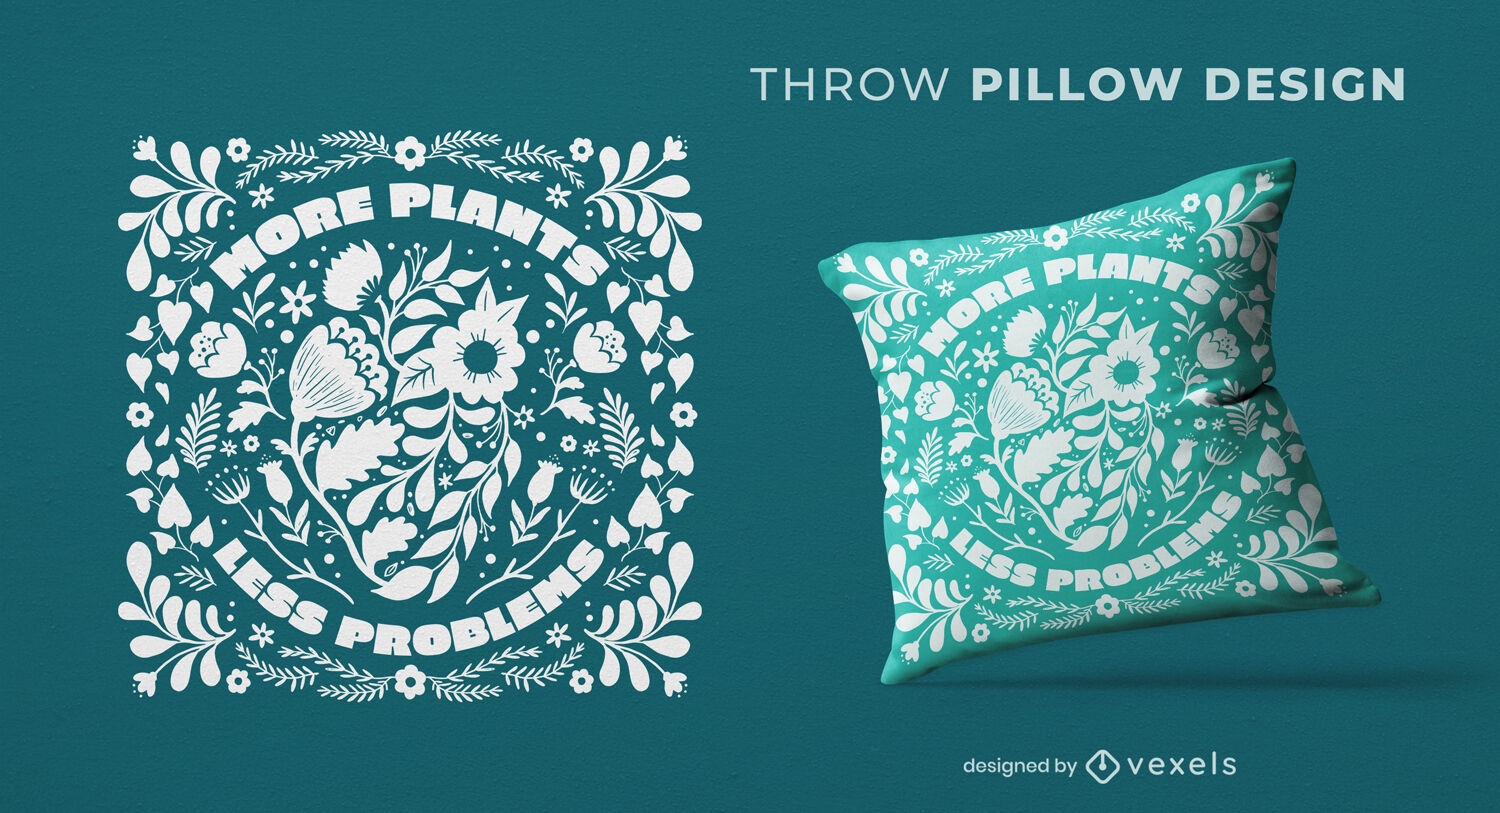 More plants throw pillow design